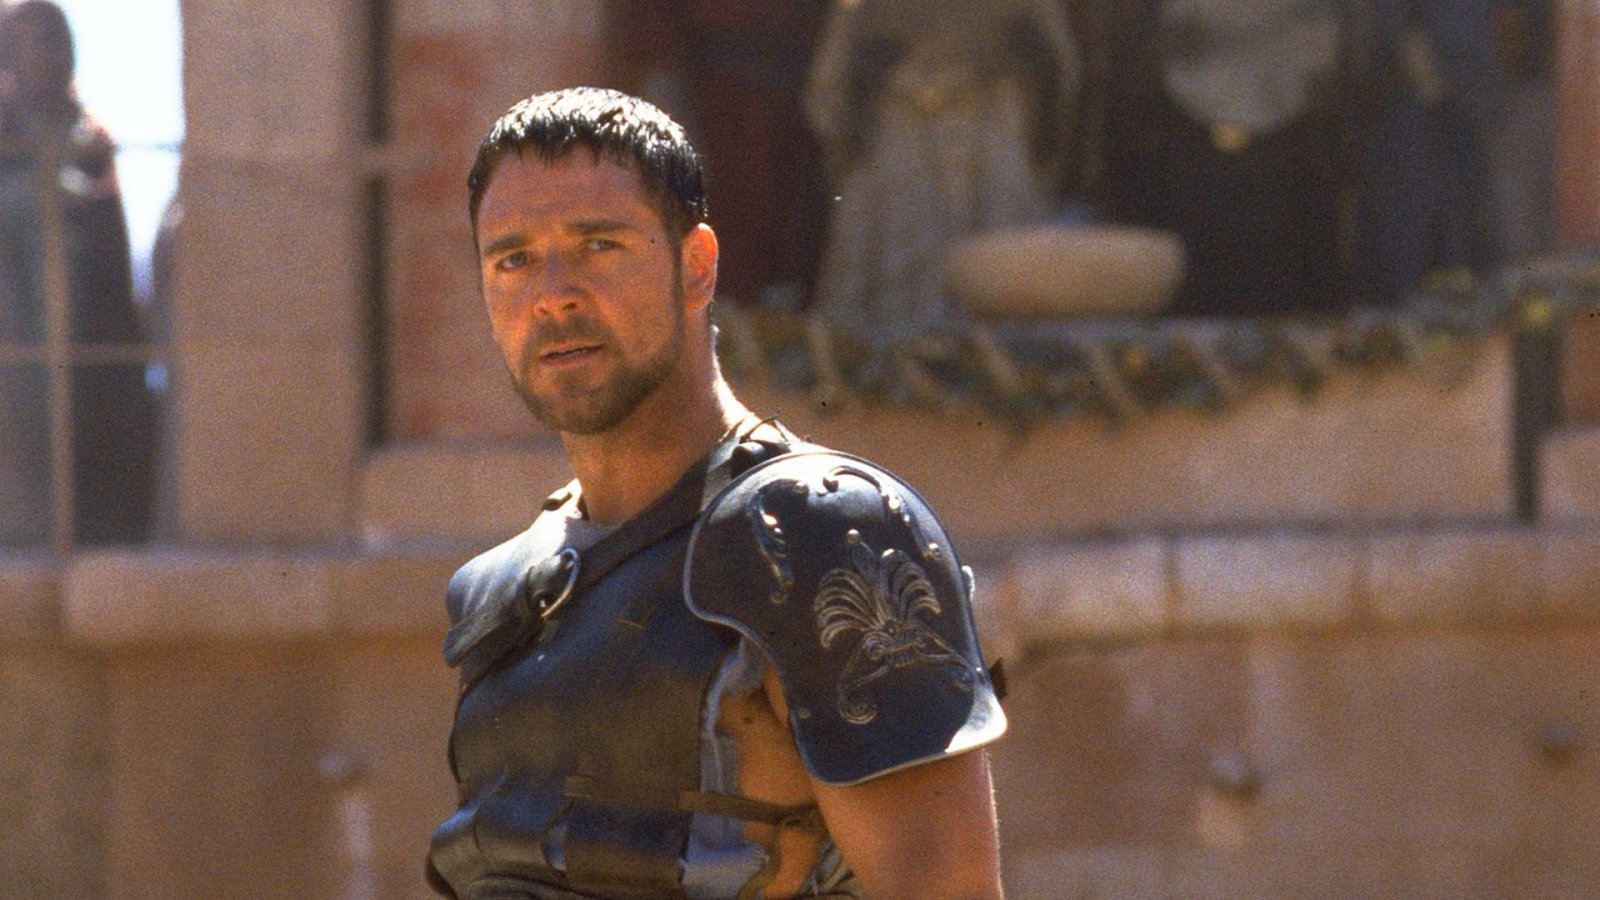 Il gladiatore 2: Ridley Scott sta cercando i nuovi protagonisti